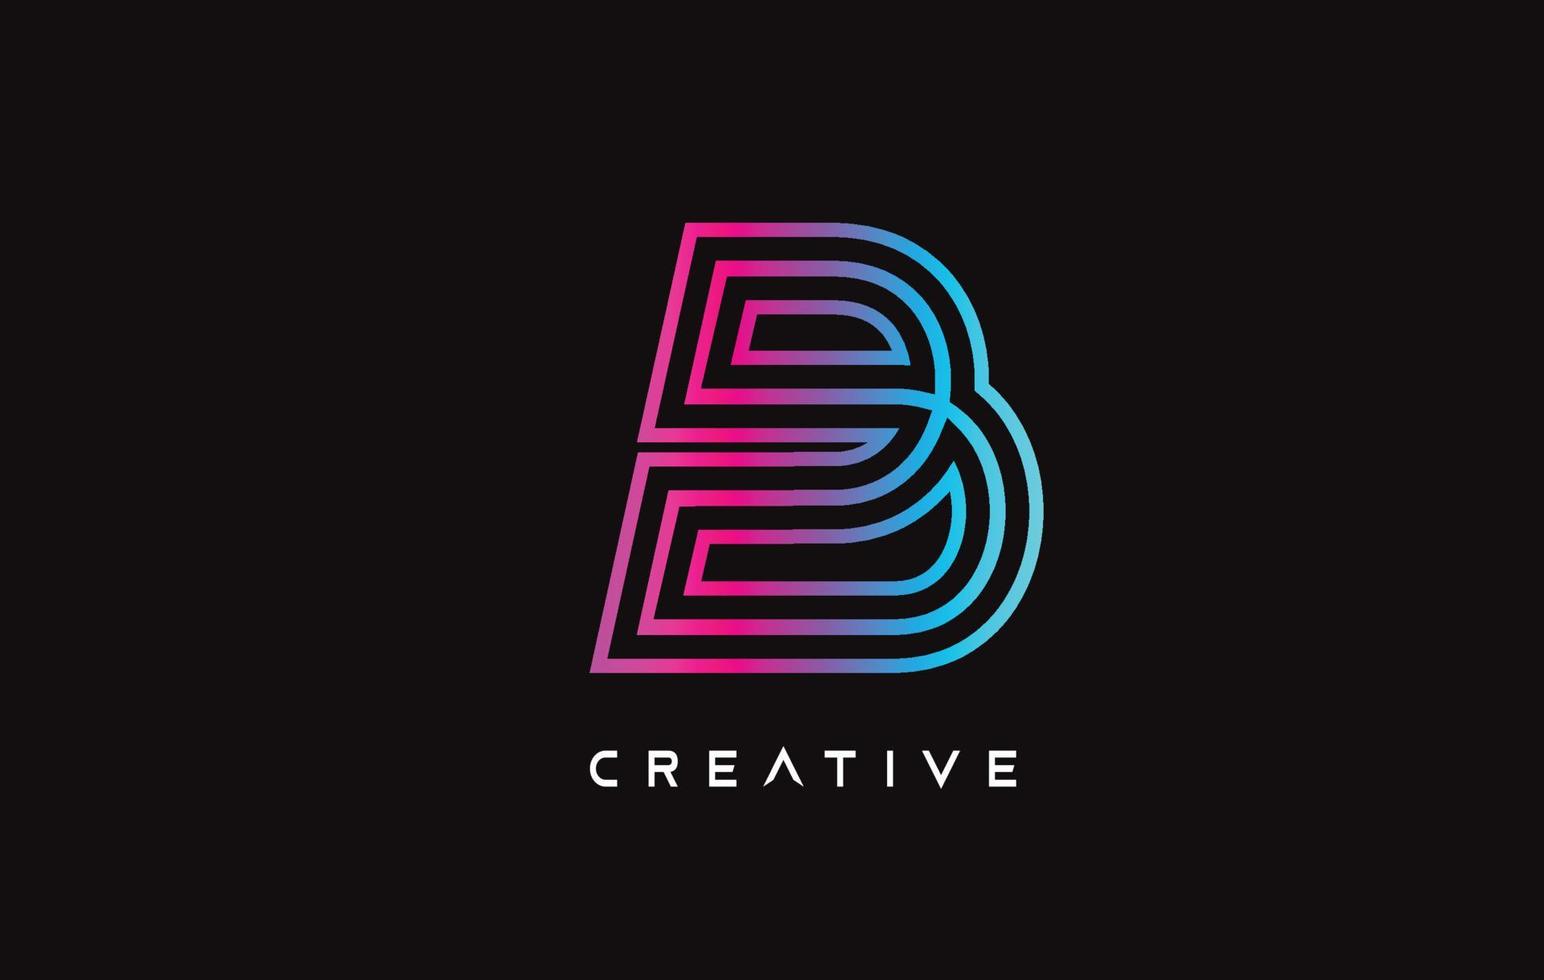 B Letter Design Logo with Creative Modern Trendy Minimalist Monogram Style Vector. vector